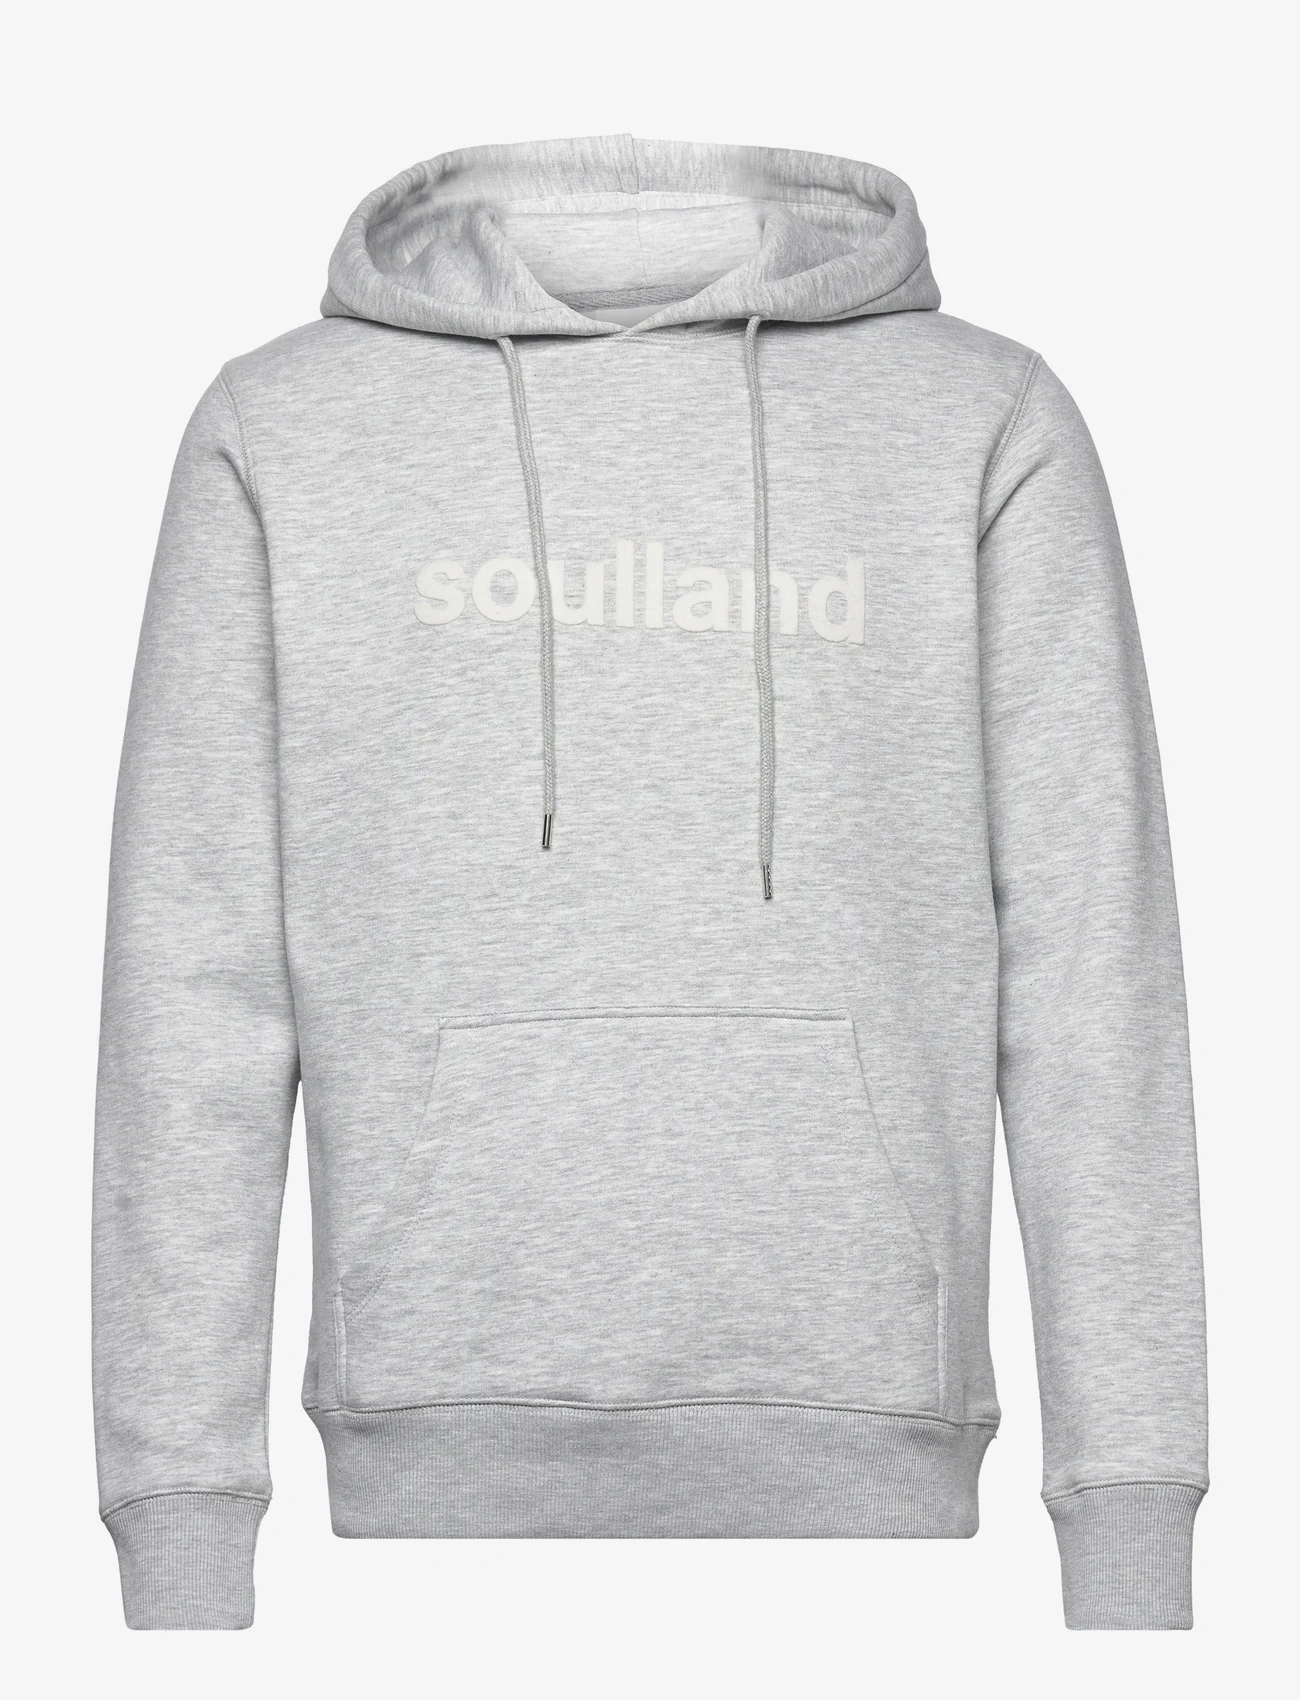 Soulland - Googie hoodie - huvtröjor - grey melange - 0